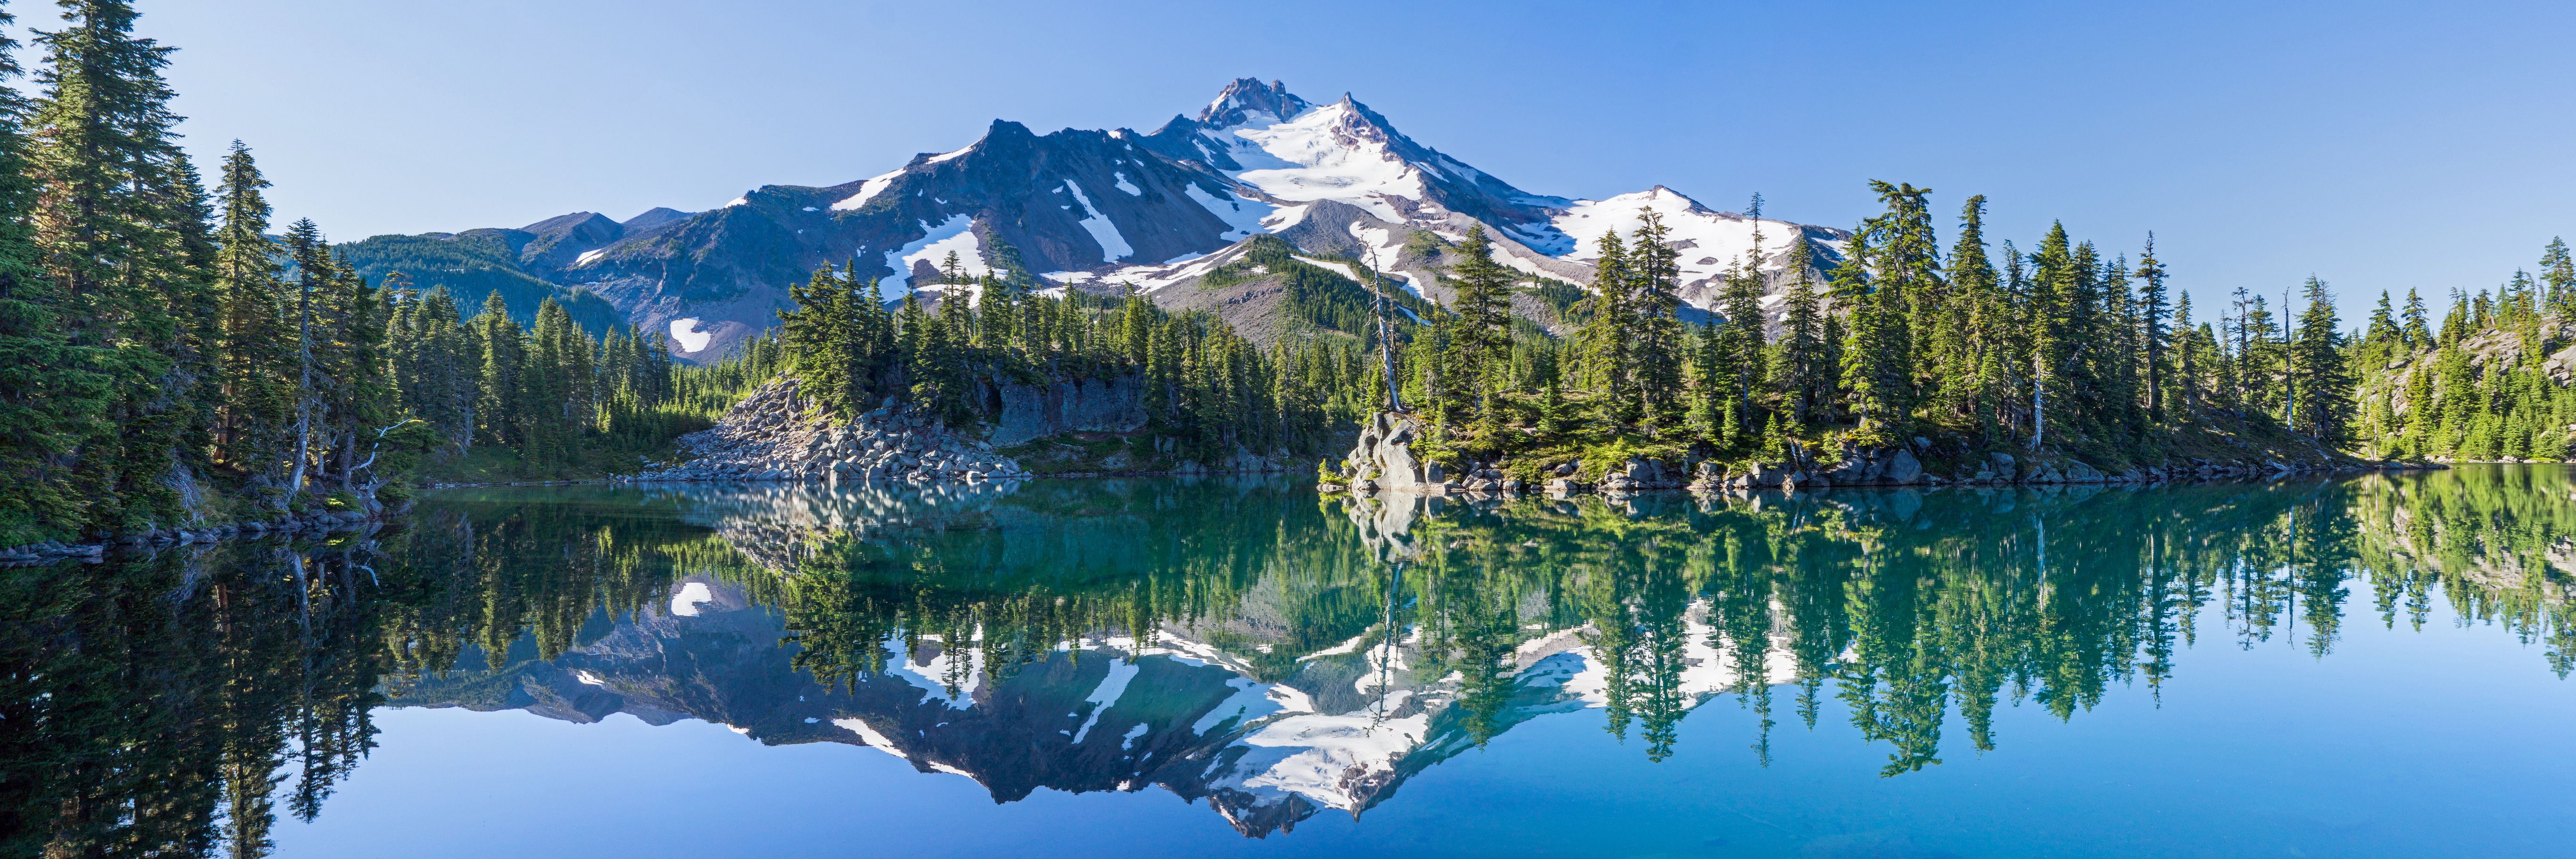 Mount Jefferson reflected in a mountain lake in Oregon